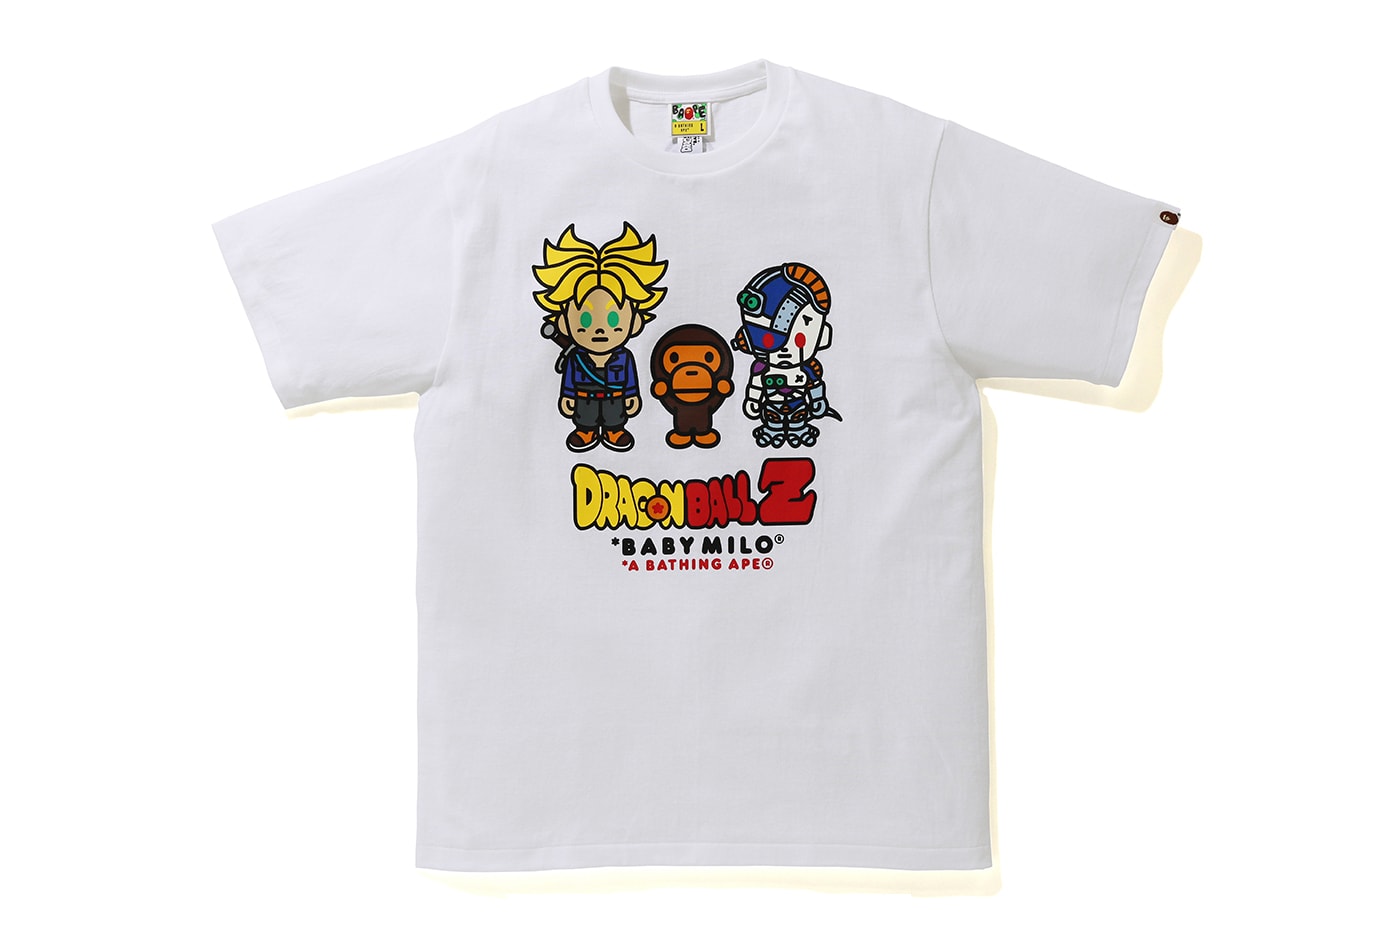 Dragonball Z BAPE Collection Release Info Baby Milo A Bathing Ape Goku Cell Vegeta Trunks Gohan Jacket T-shirt Hoodie Polo Towel Keychain